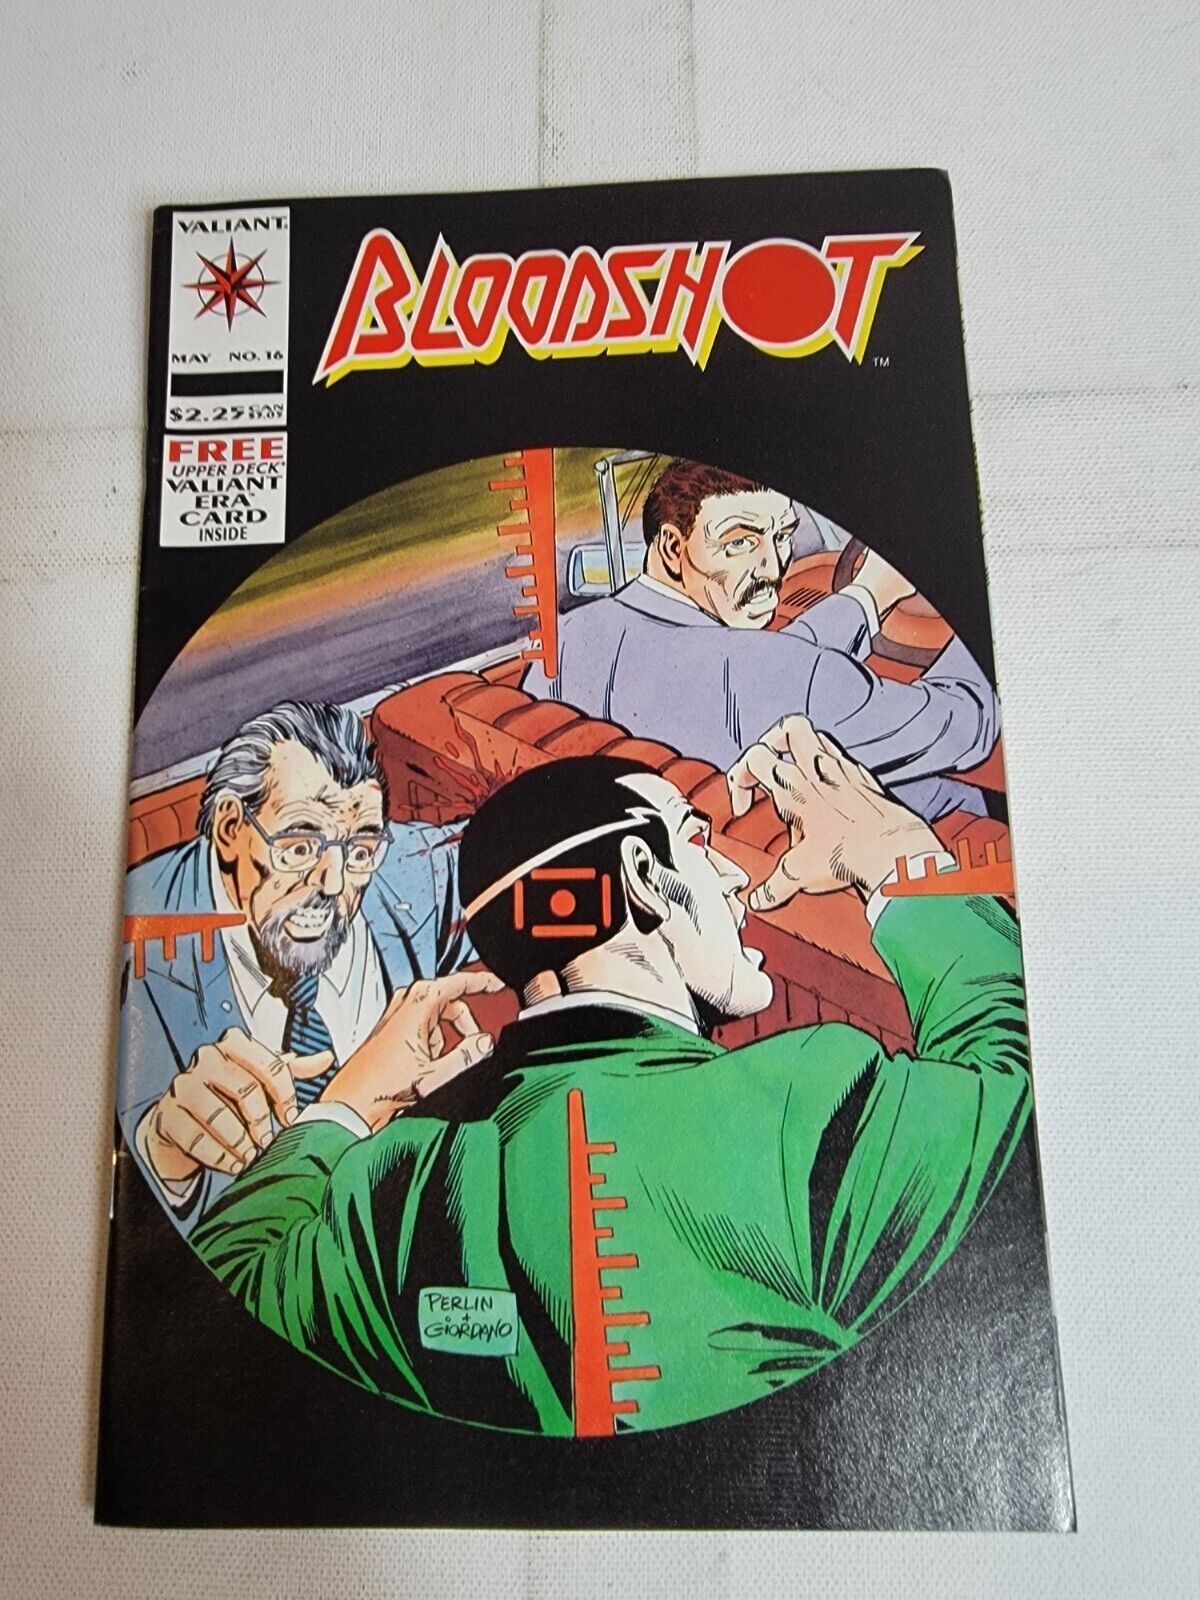 Comic Book Valiant Comics Bloodshot #16 Vintage